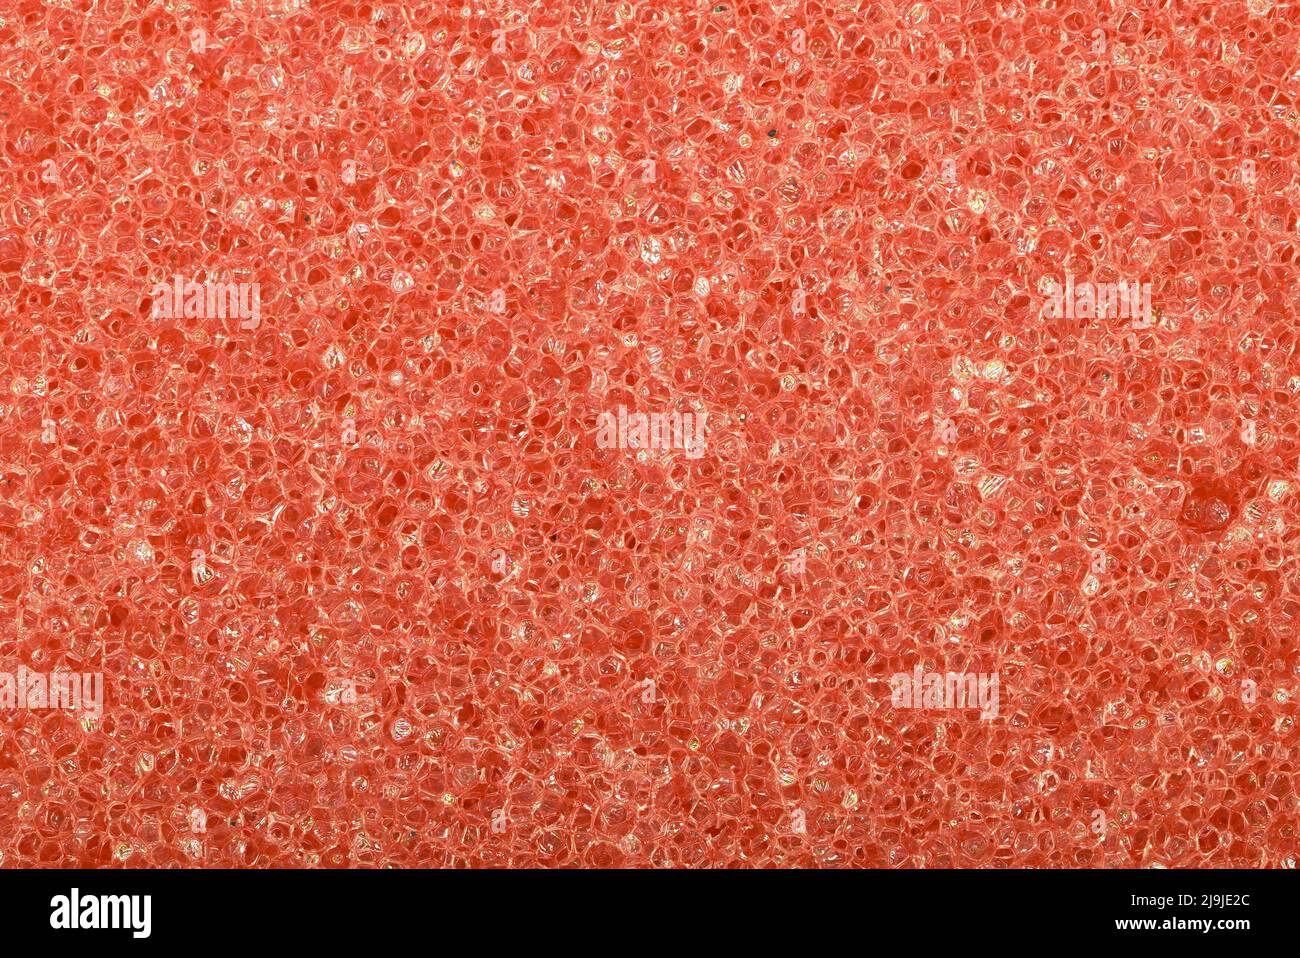 Texture closeup of sponge surface Stock Photo